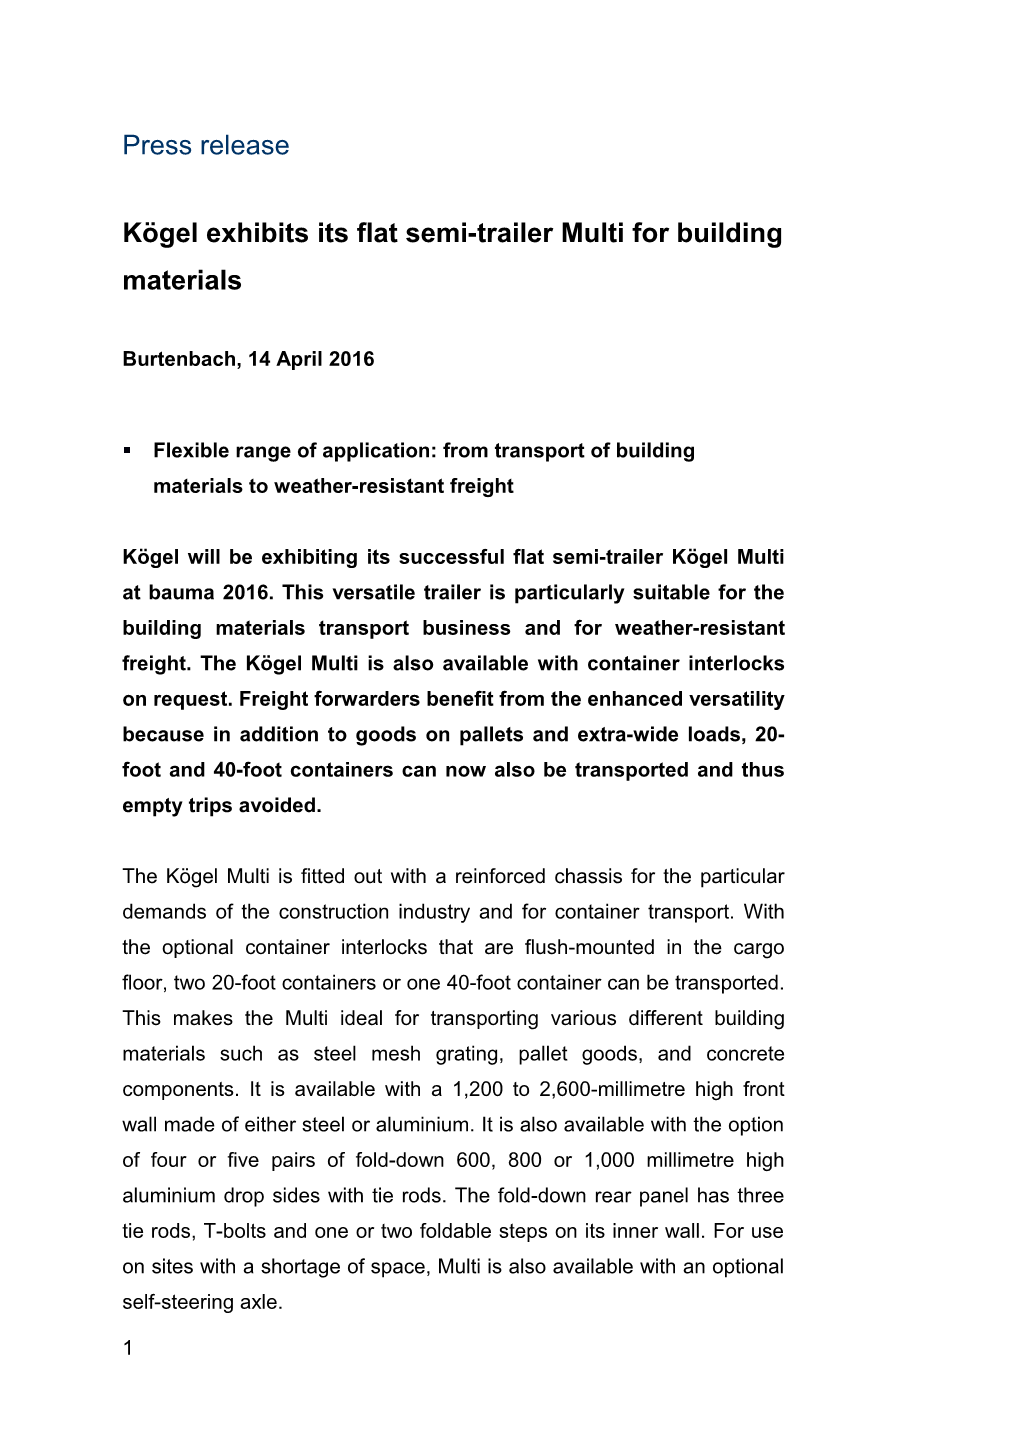 Kögel Exhibits Its Flat Semi-Trailer Multi for Building Materials